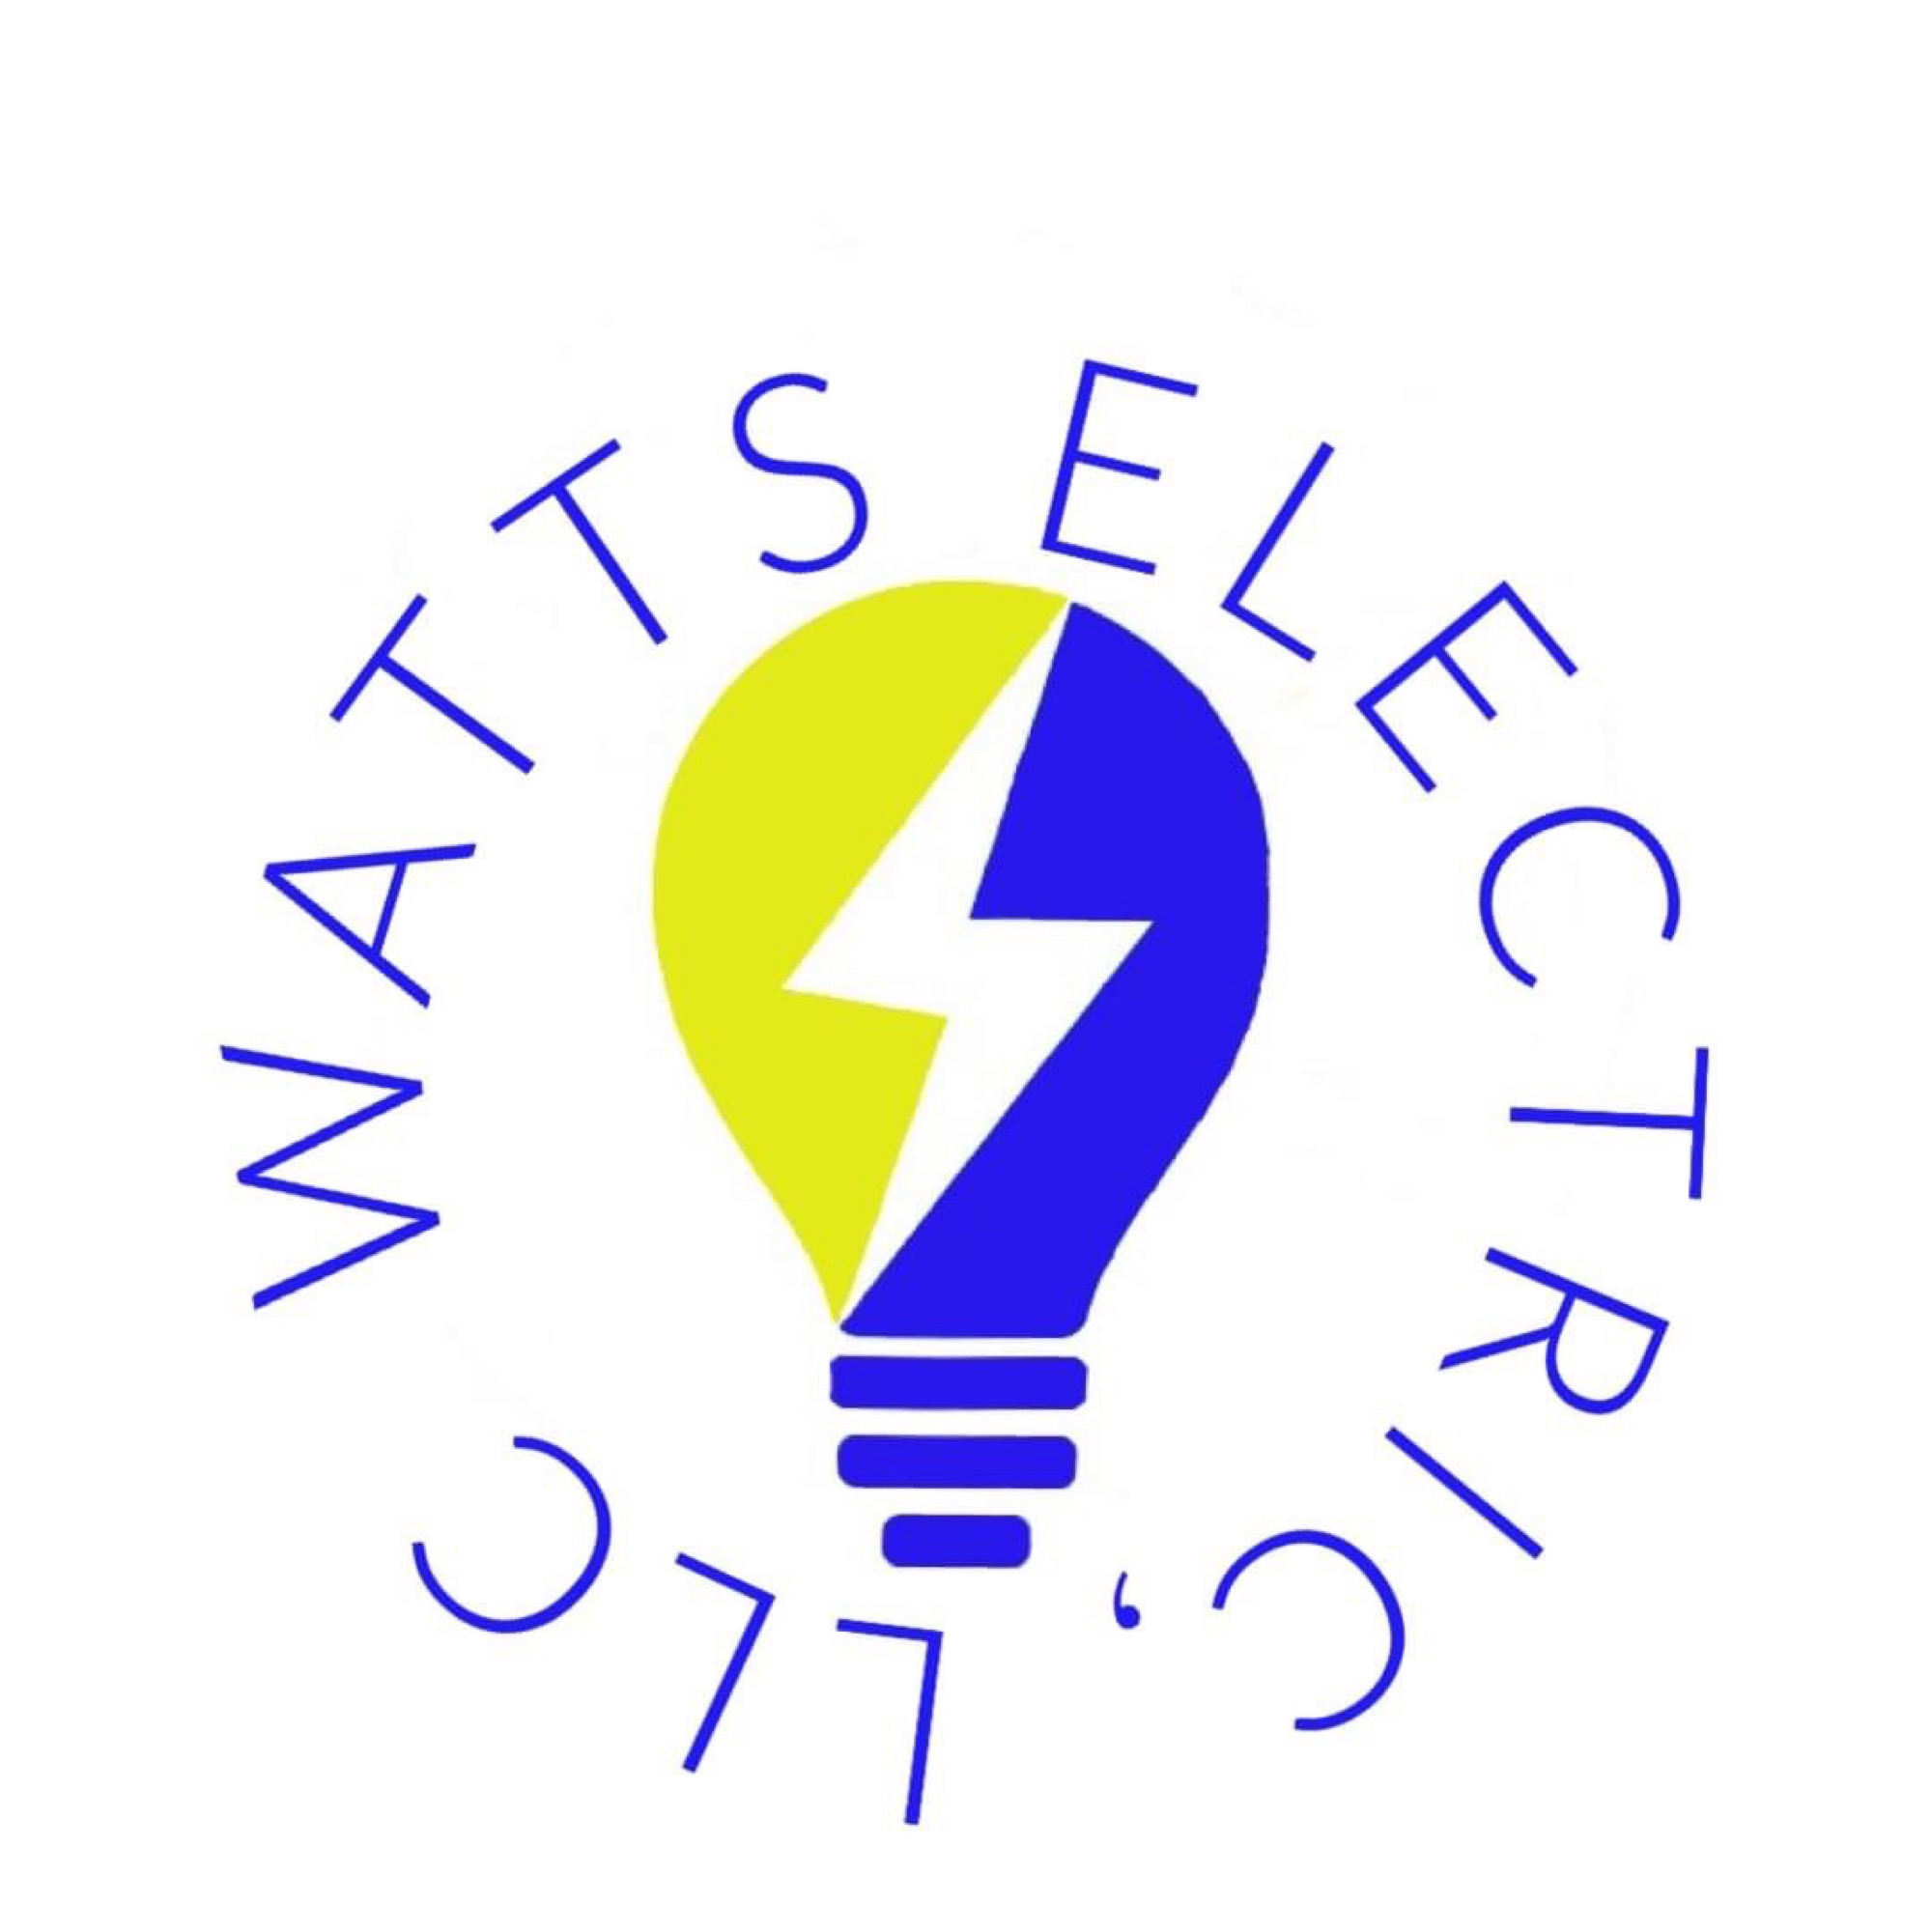 Watts Electric Logo